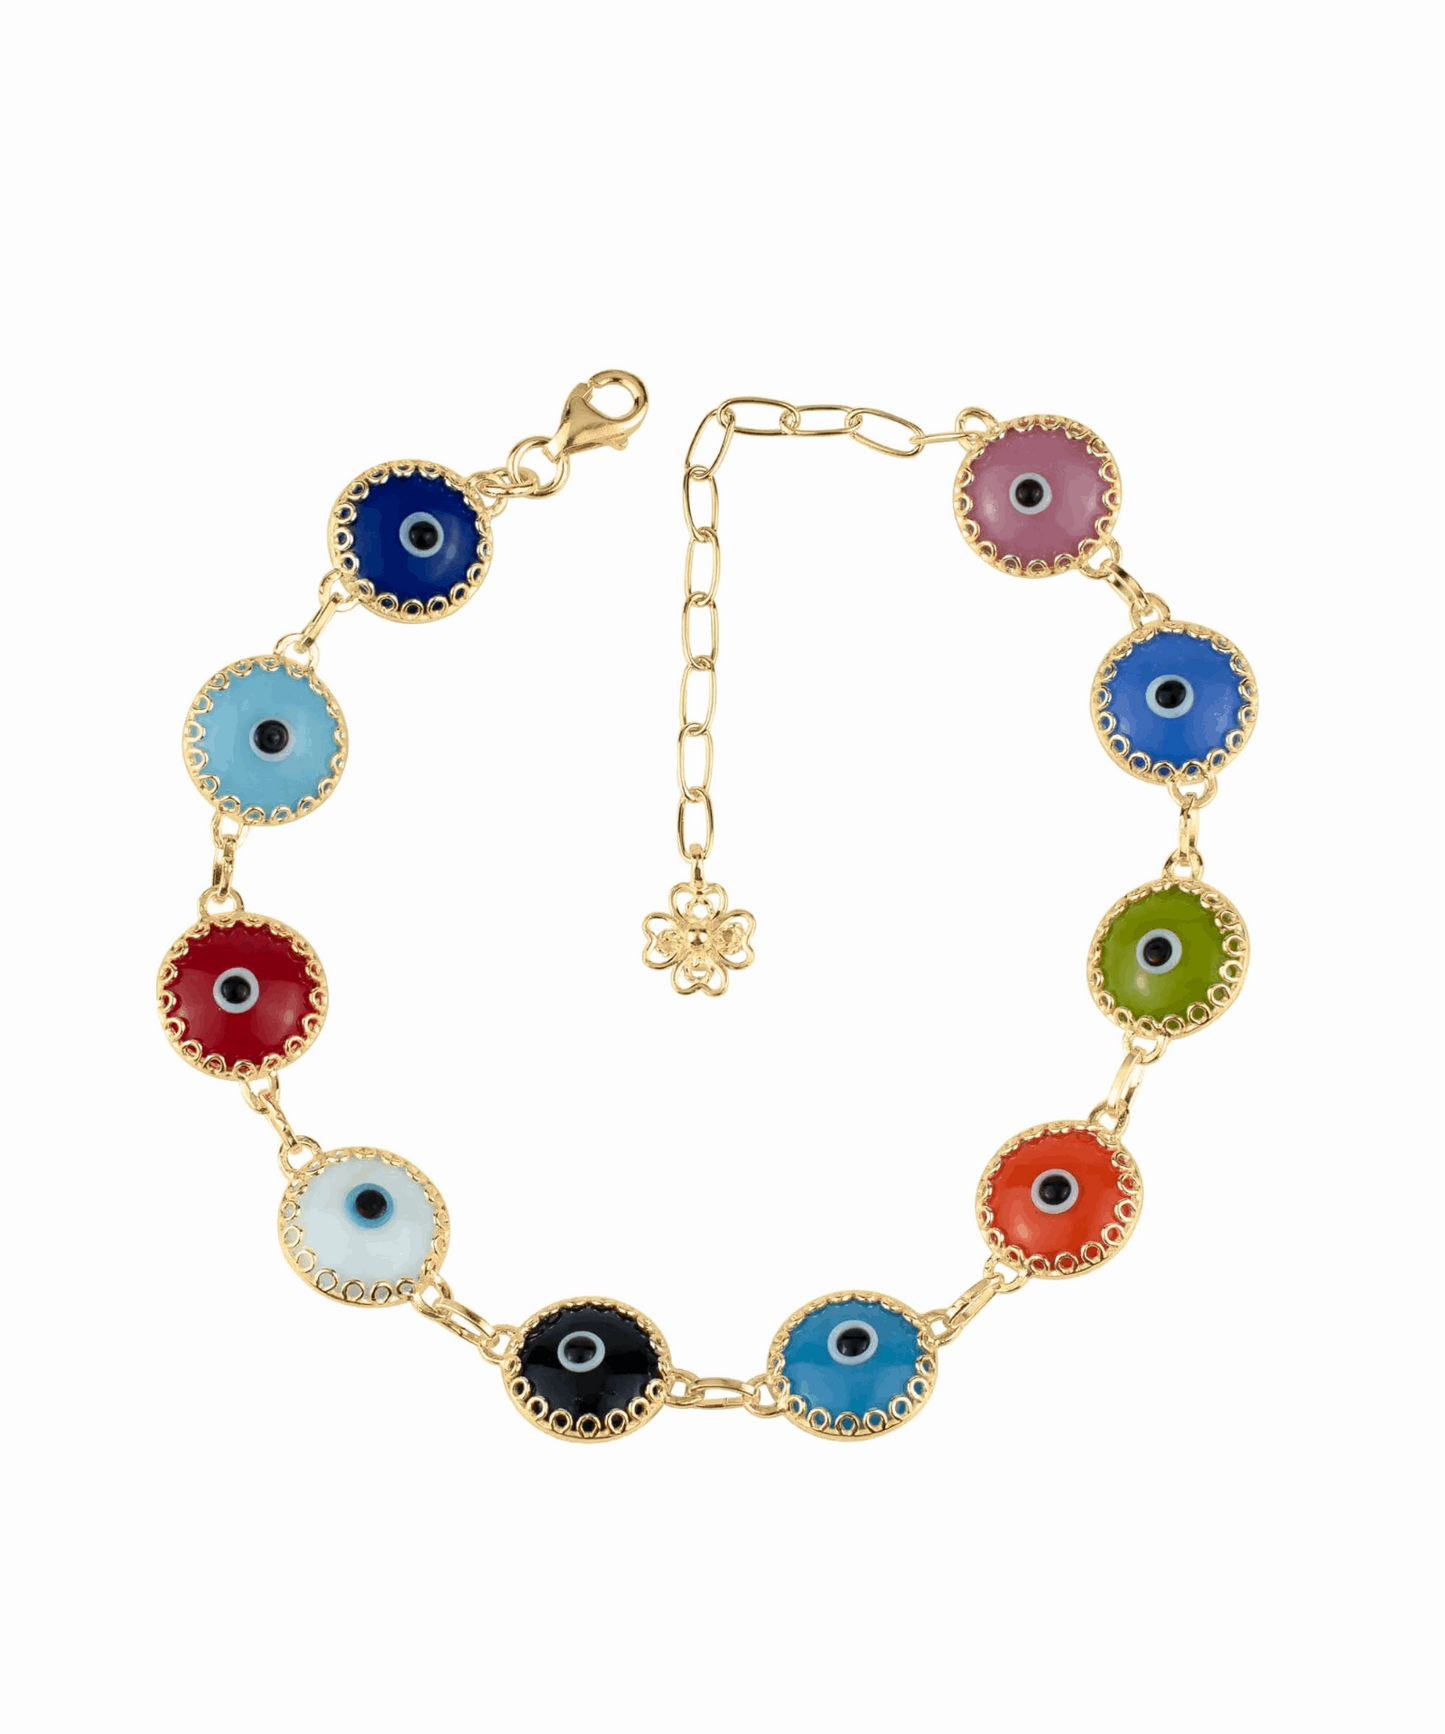 10 Beads Multicolor Evil Eye Women Gold Plated Silver Link Bracelet